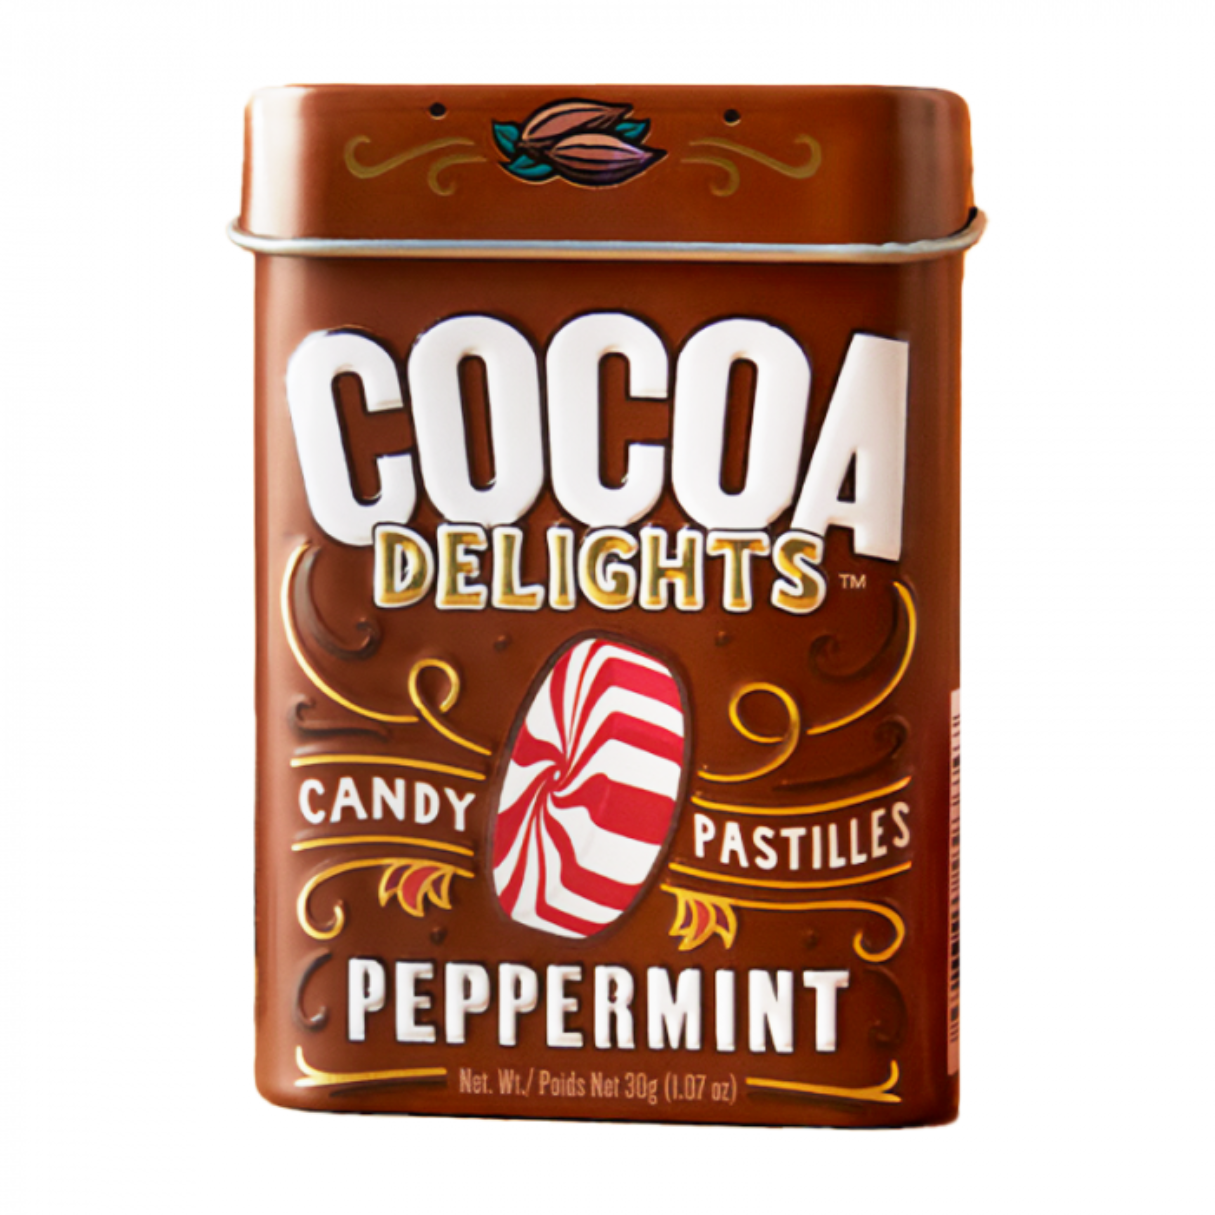 Cocoa Delights Peppermint 1.07oz - 144ct